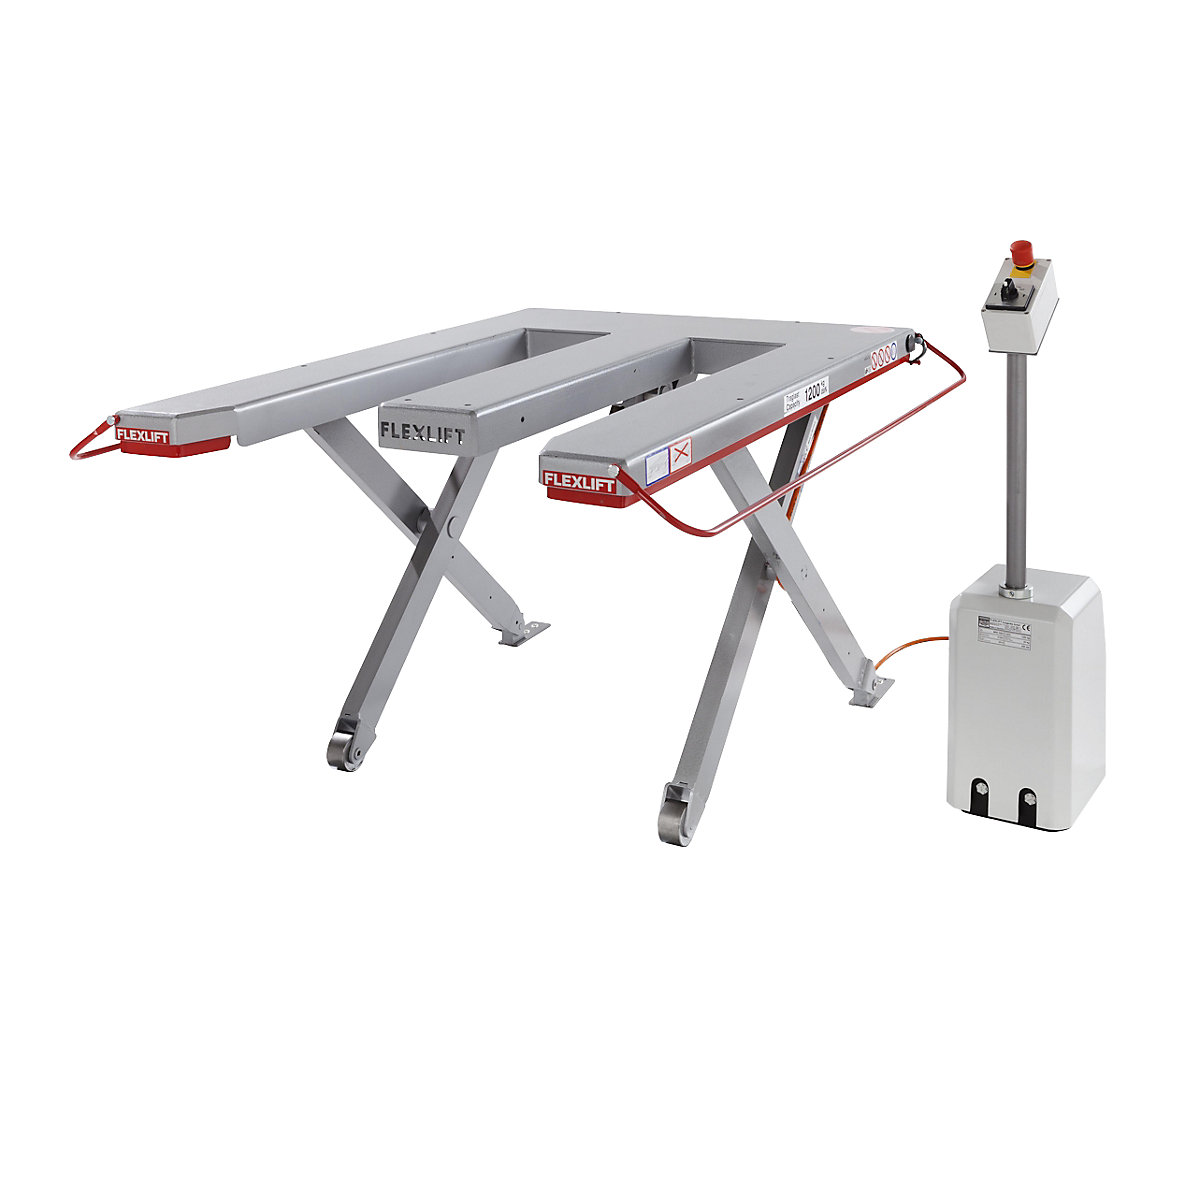 Low profile lift table, E series - Flexlift